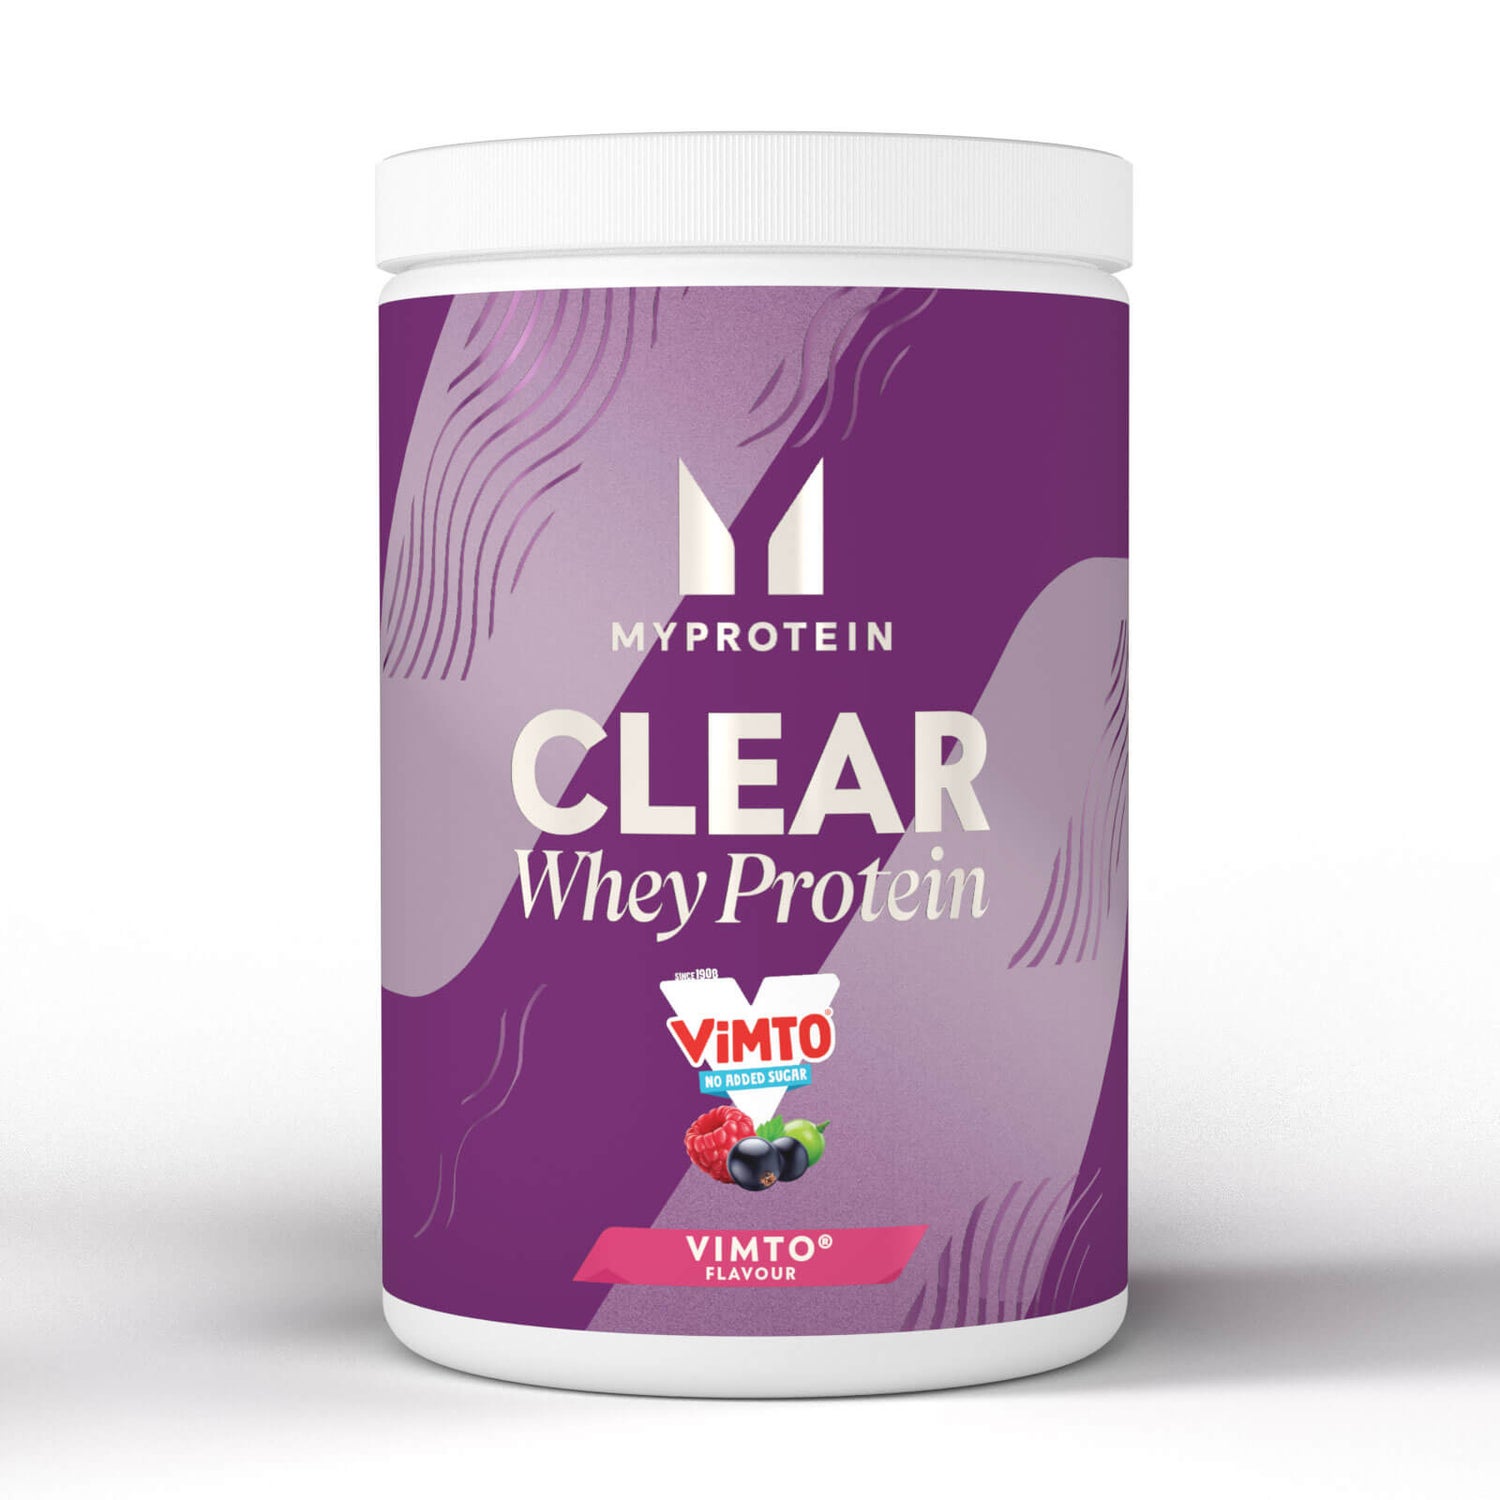 Clear Whey Protein Powder - 20servings - Vimto - Original